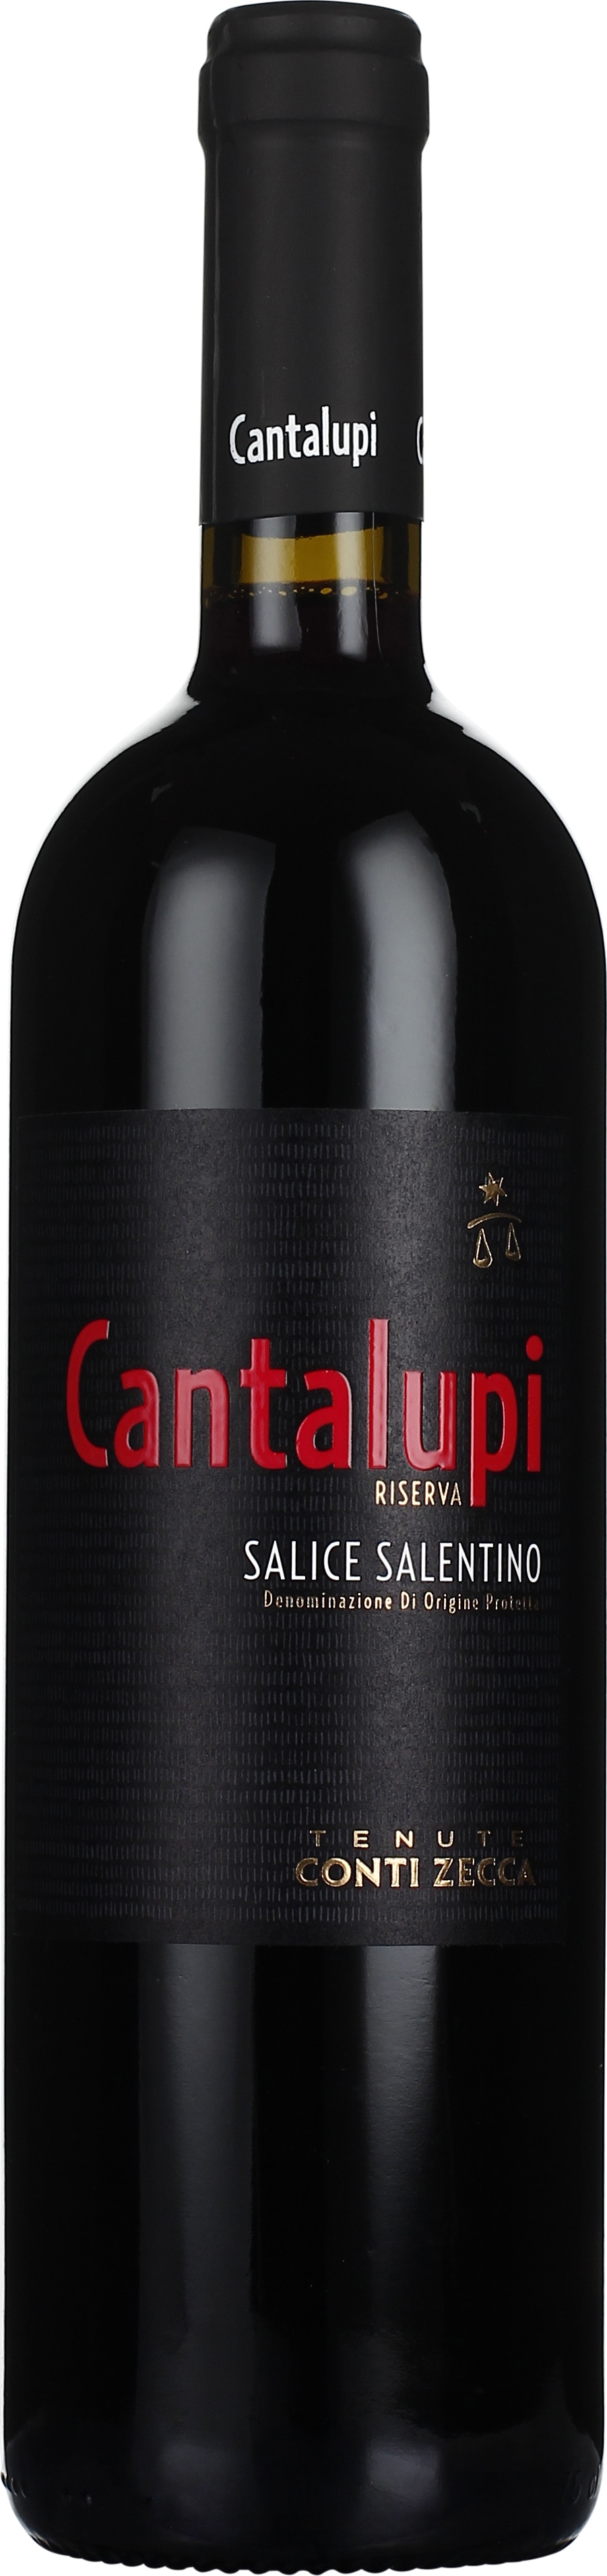 Drankdozijn Cantalupi Salice Salentino Riserva 75CL aanbieding